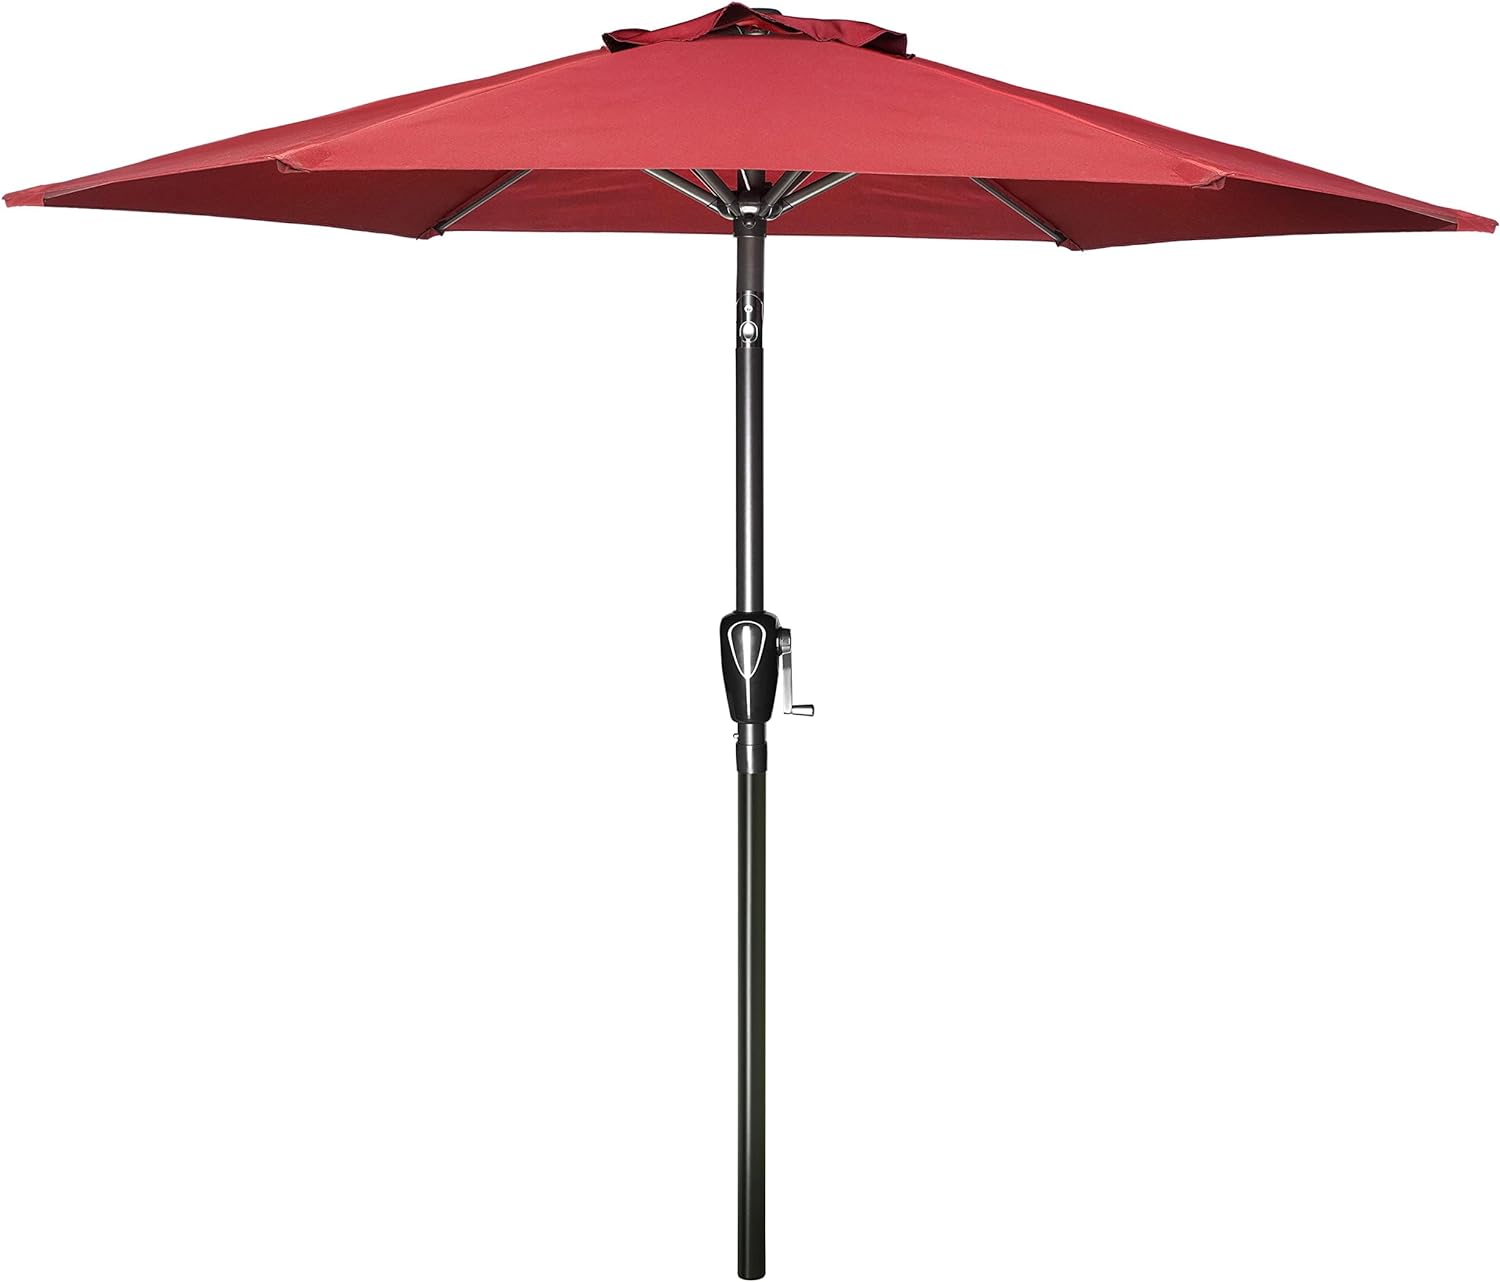 Simple Deluxe 9' Patio Umbrella Outdoor Table Market Yard Umbrella with Push Button Tilt/Crank, 8 Sturdy Ribs for Garden, Deck, Backyard, Pool